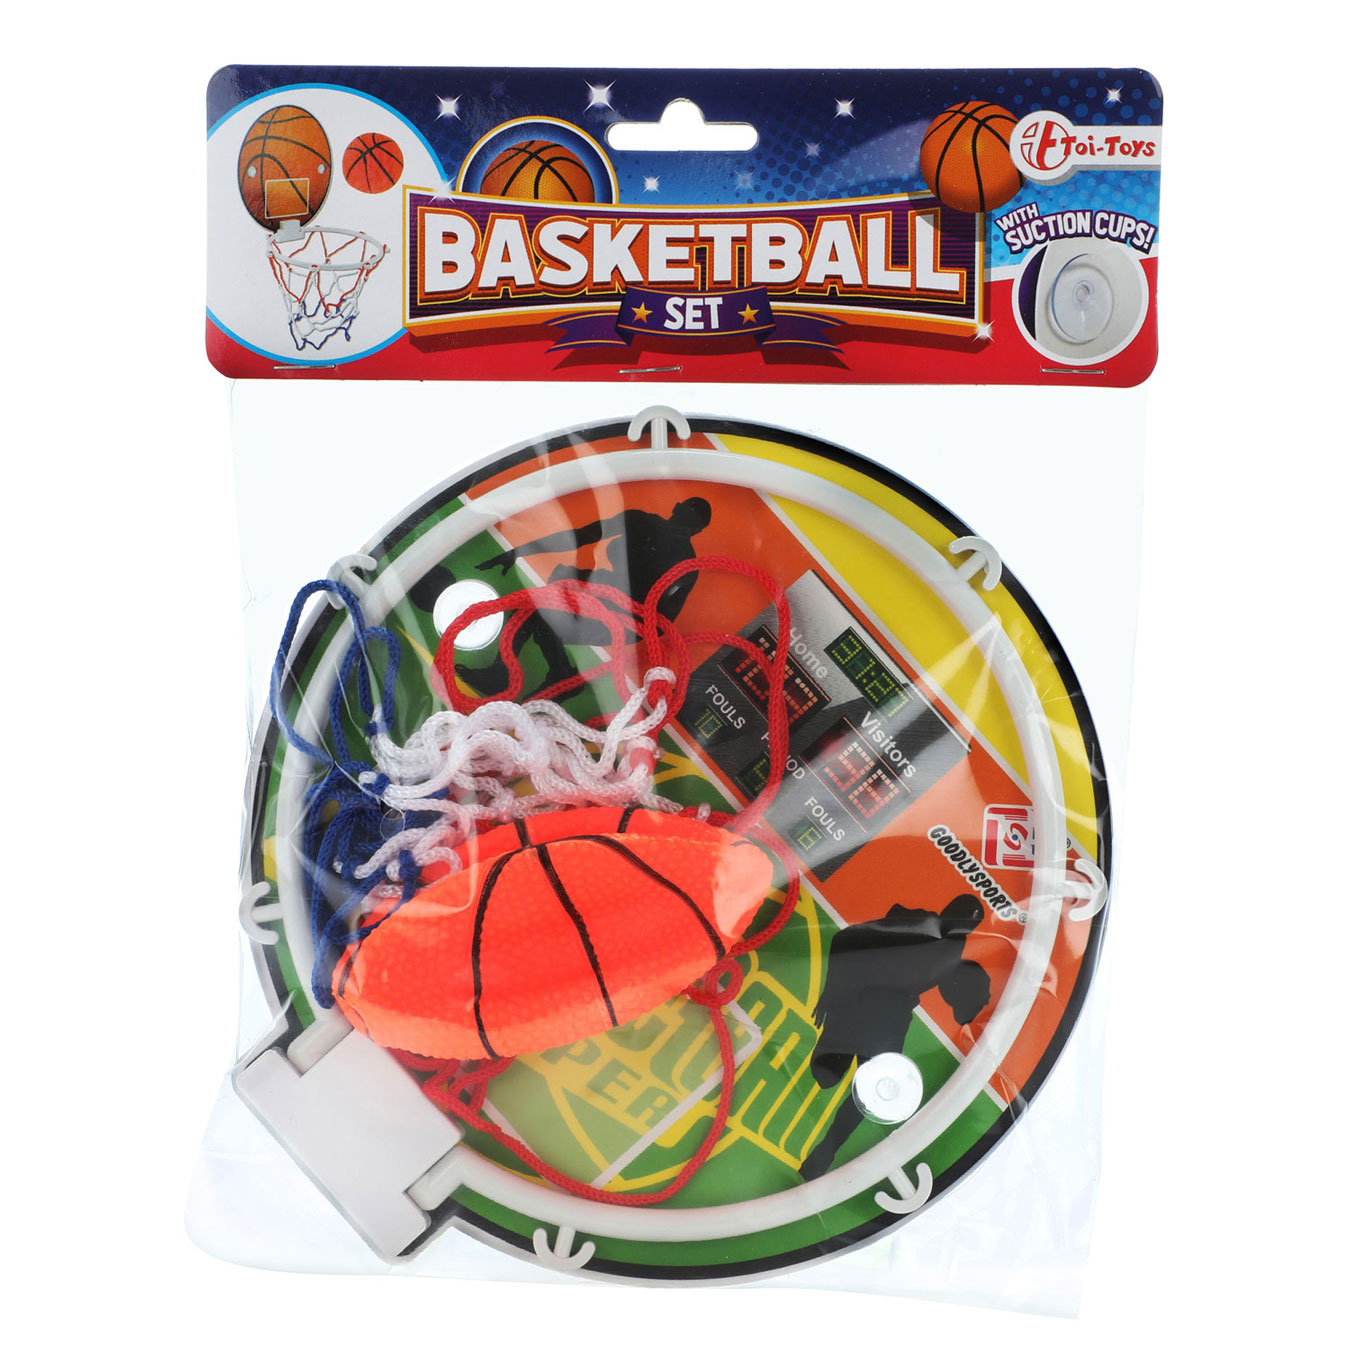 Mini ensemble de basket avec ballon et ventouses